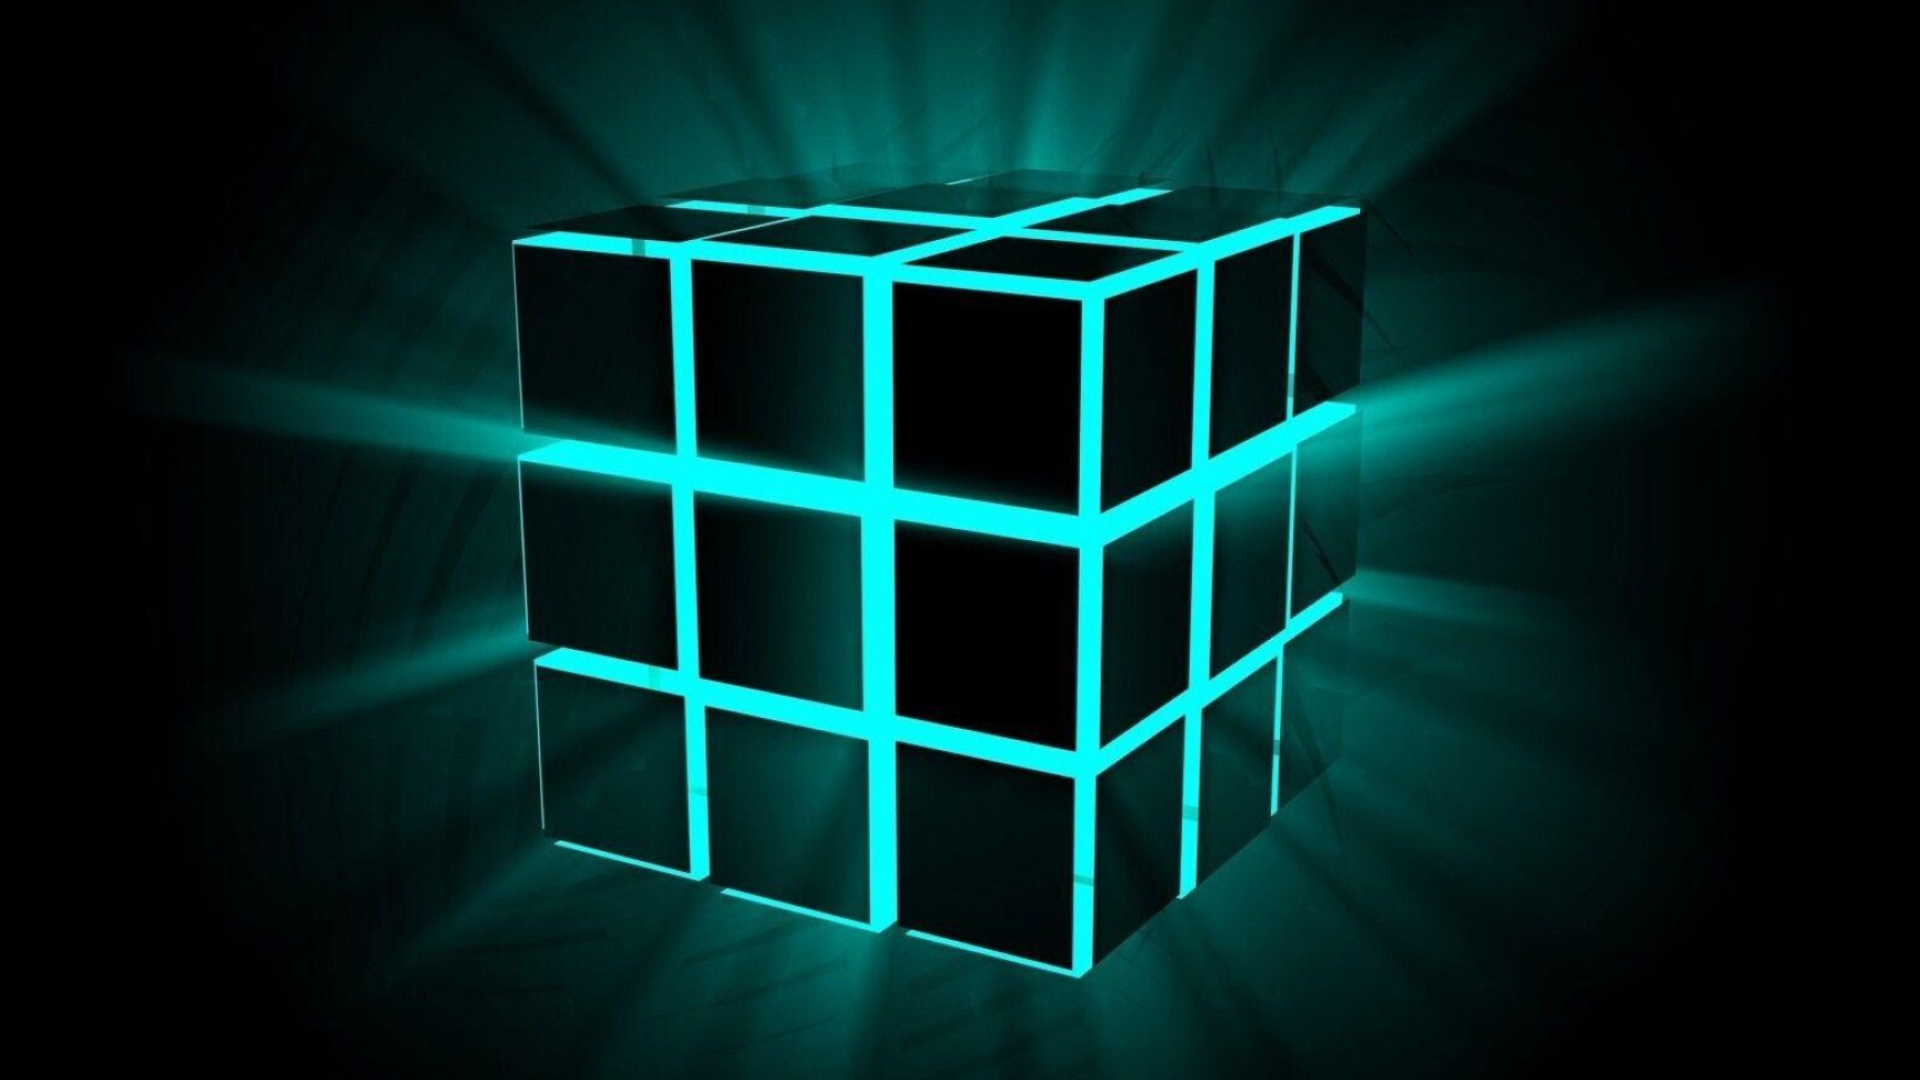 Glow in the Dark: Neon rectangles, Fluorescent symmetry pattern, Rubik's Cube. 1920x1080 Full HD Background.